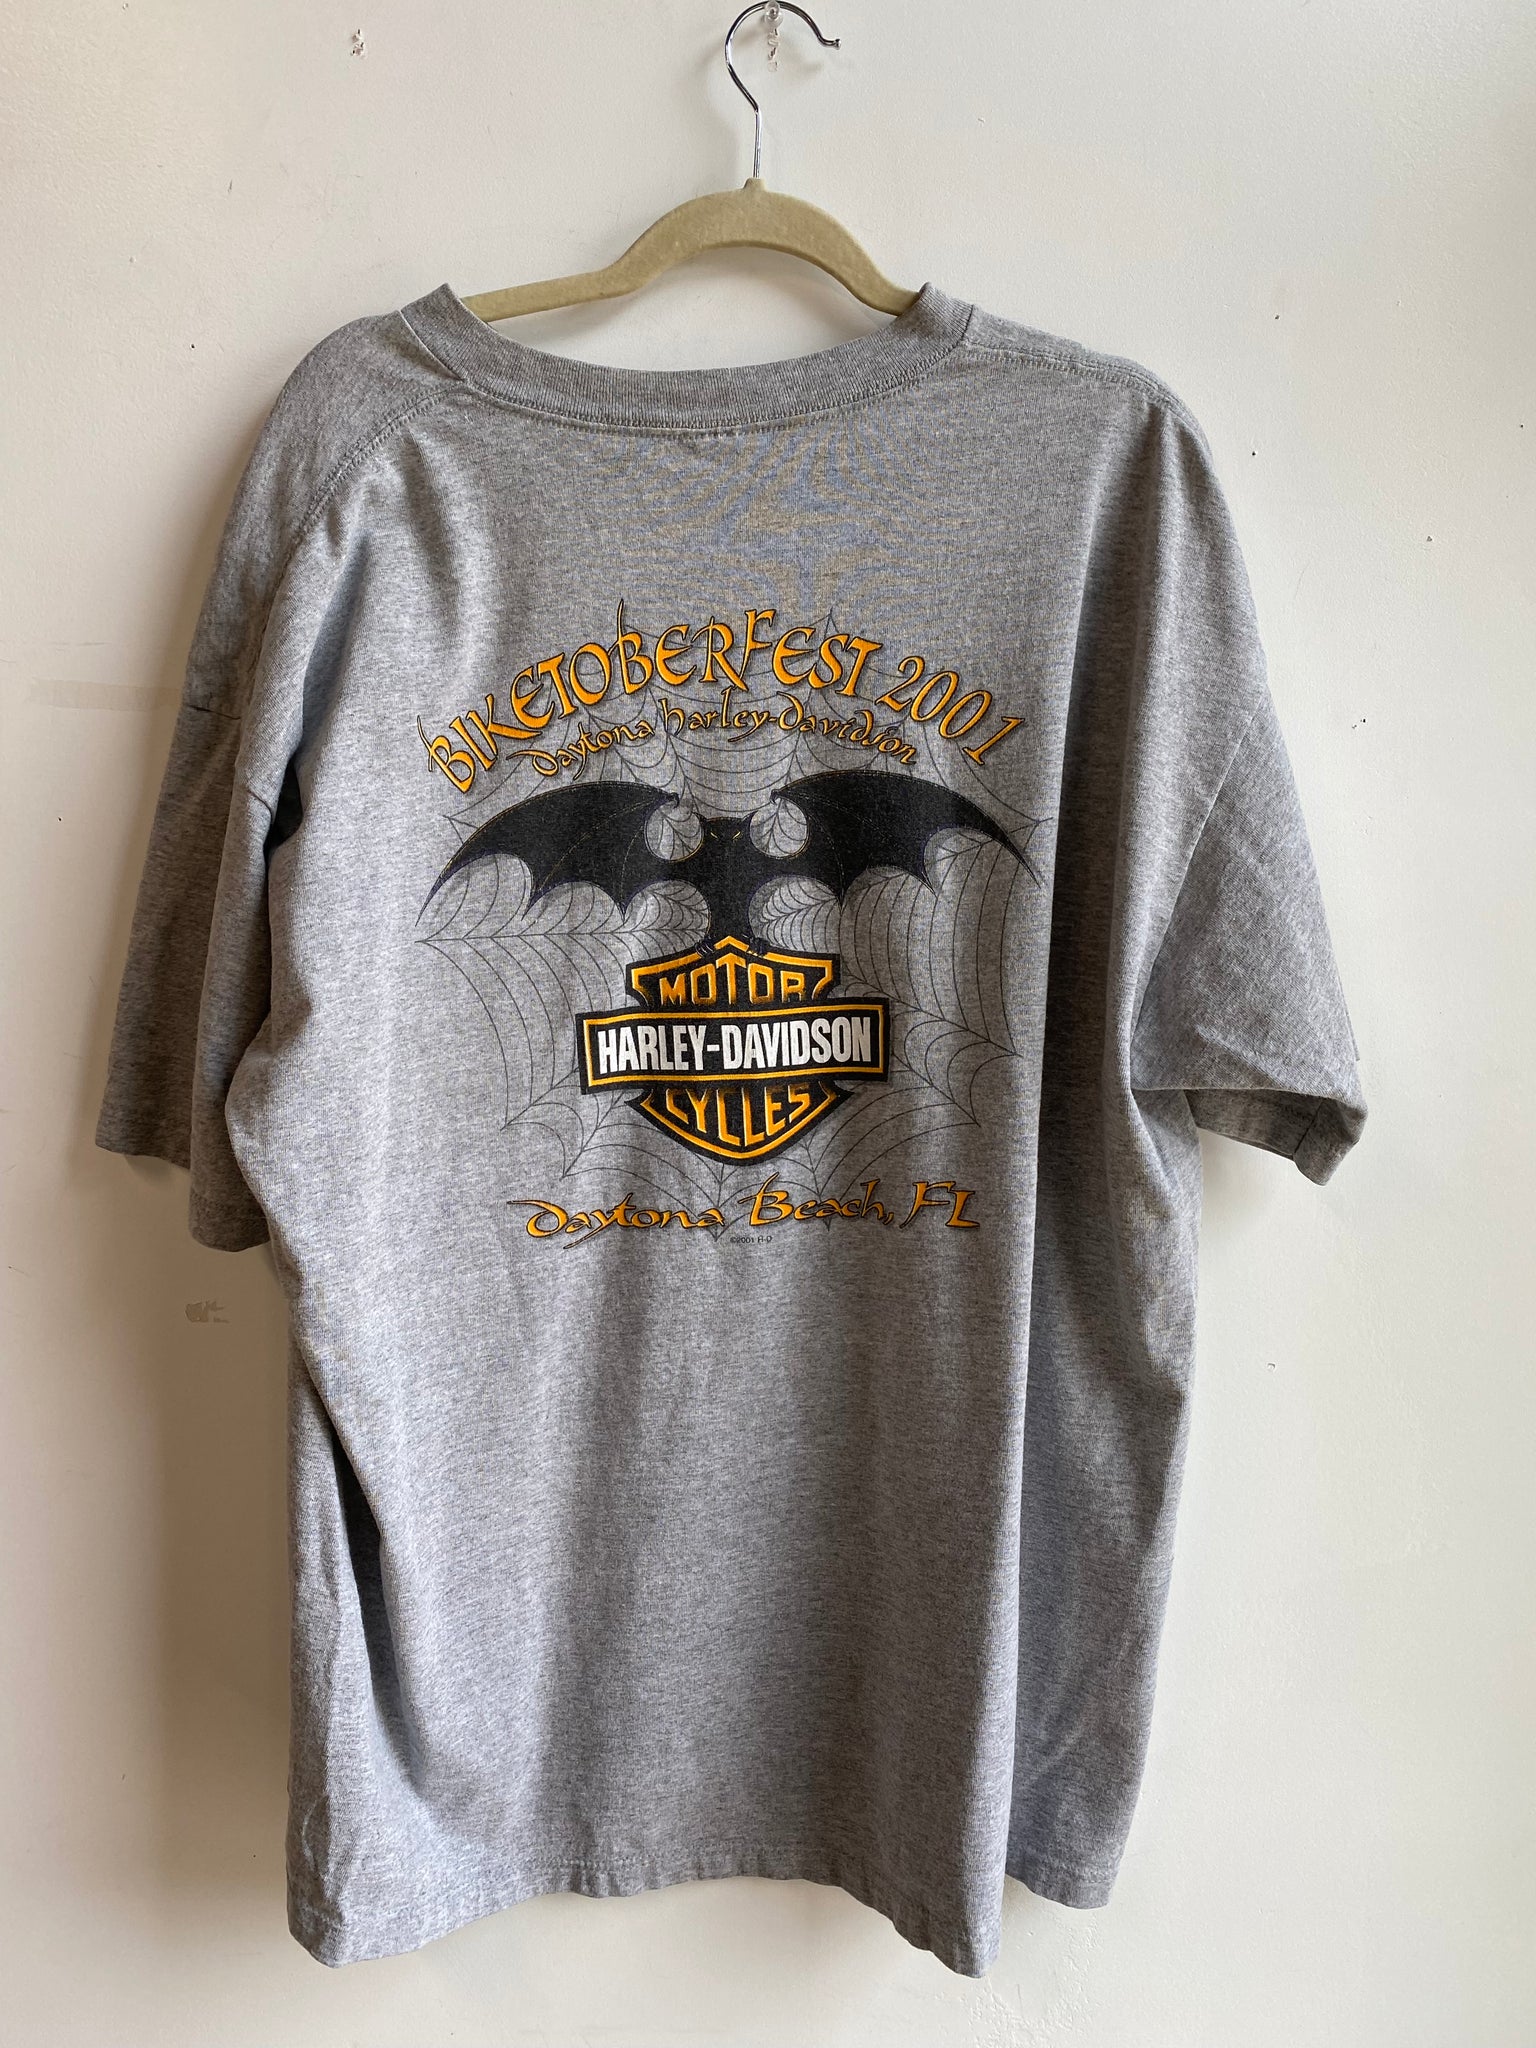 2001 Biketober Florida Harley Davidson Tee Shirt